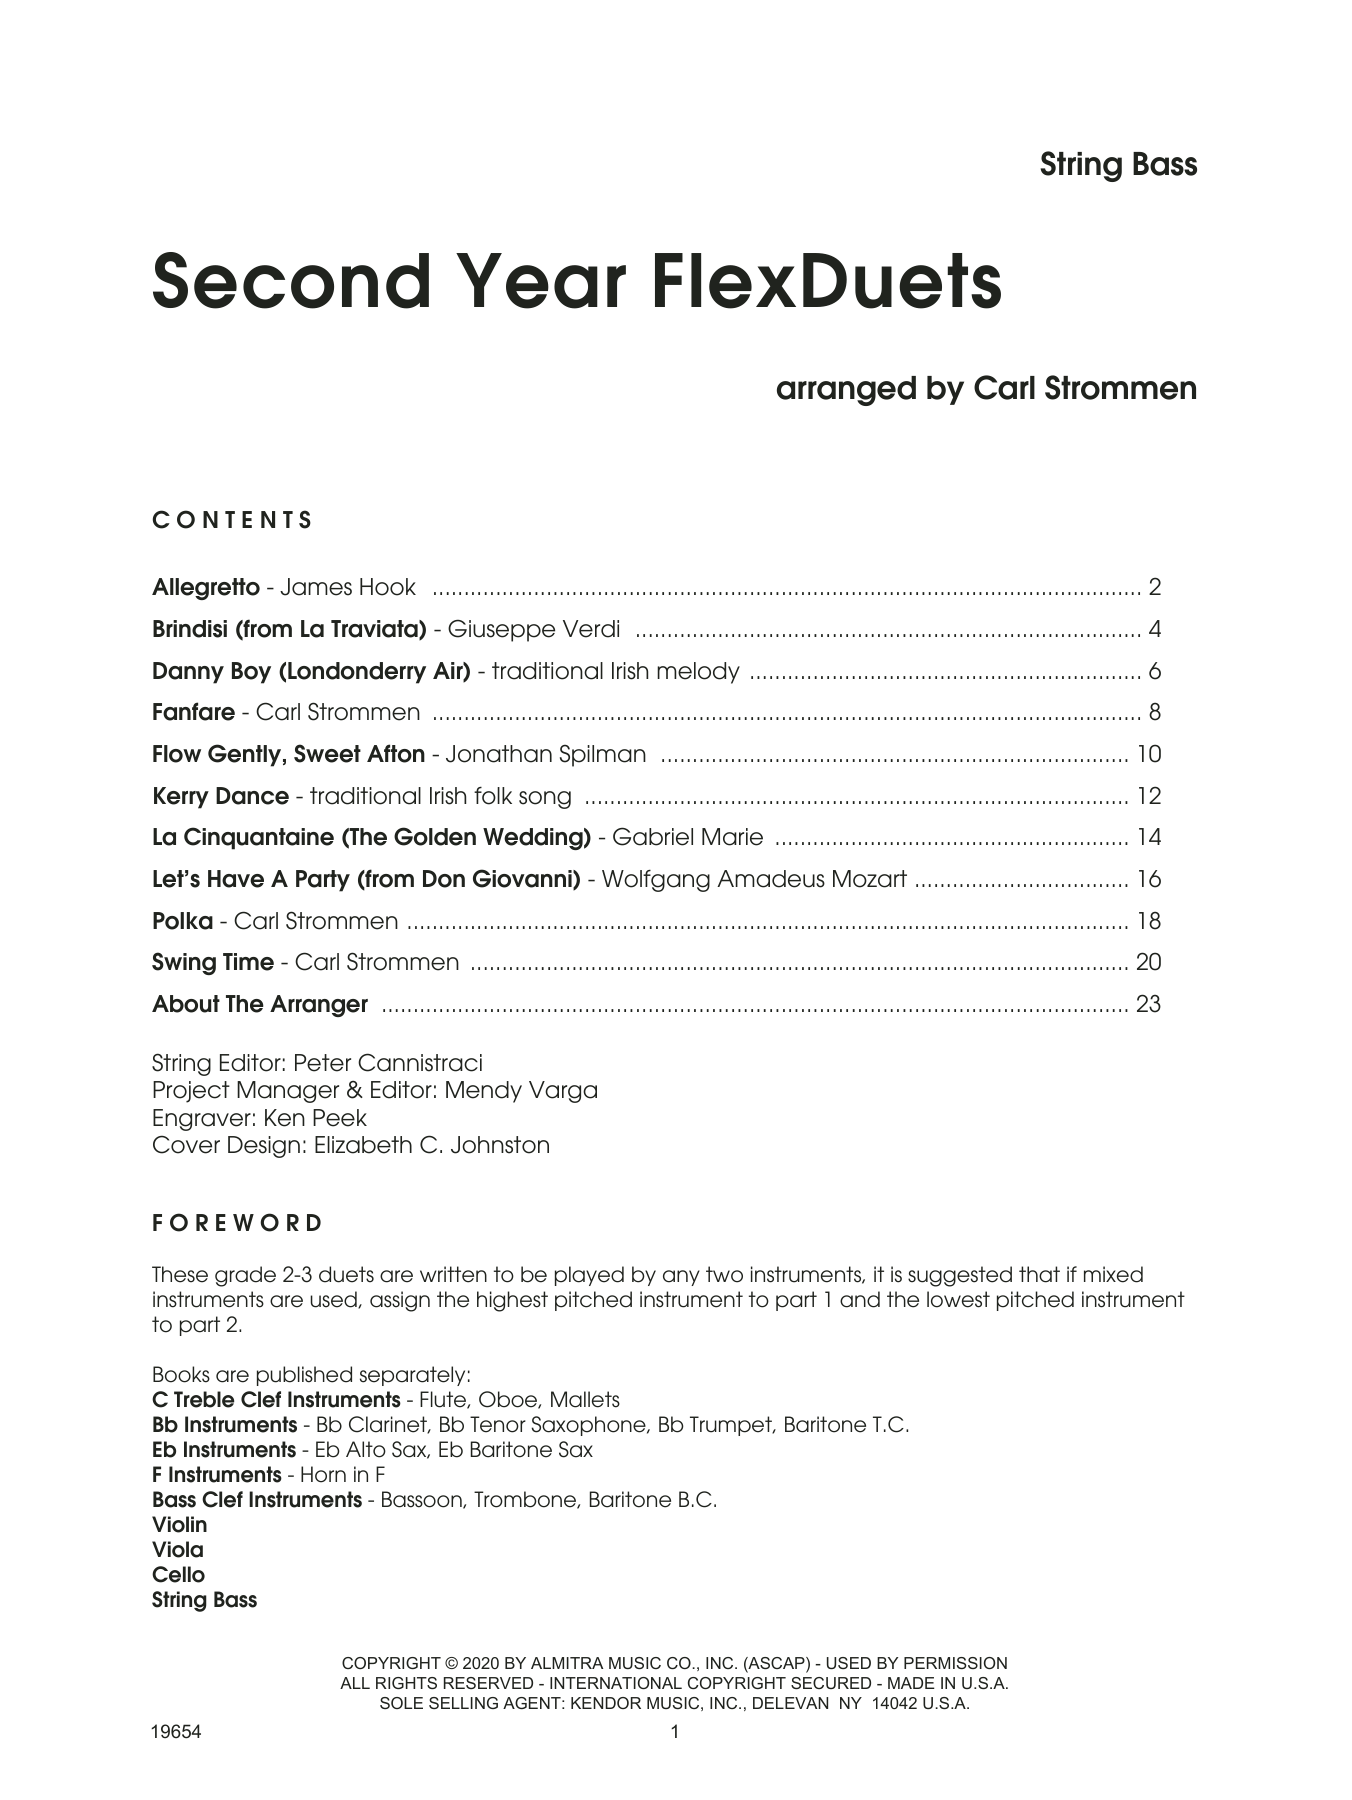 Download Carl Strommen Second Year FlexDuets - String Bass Sheet Music